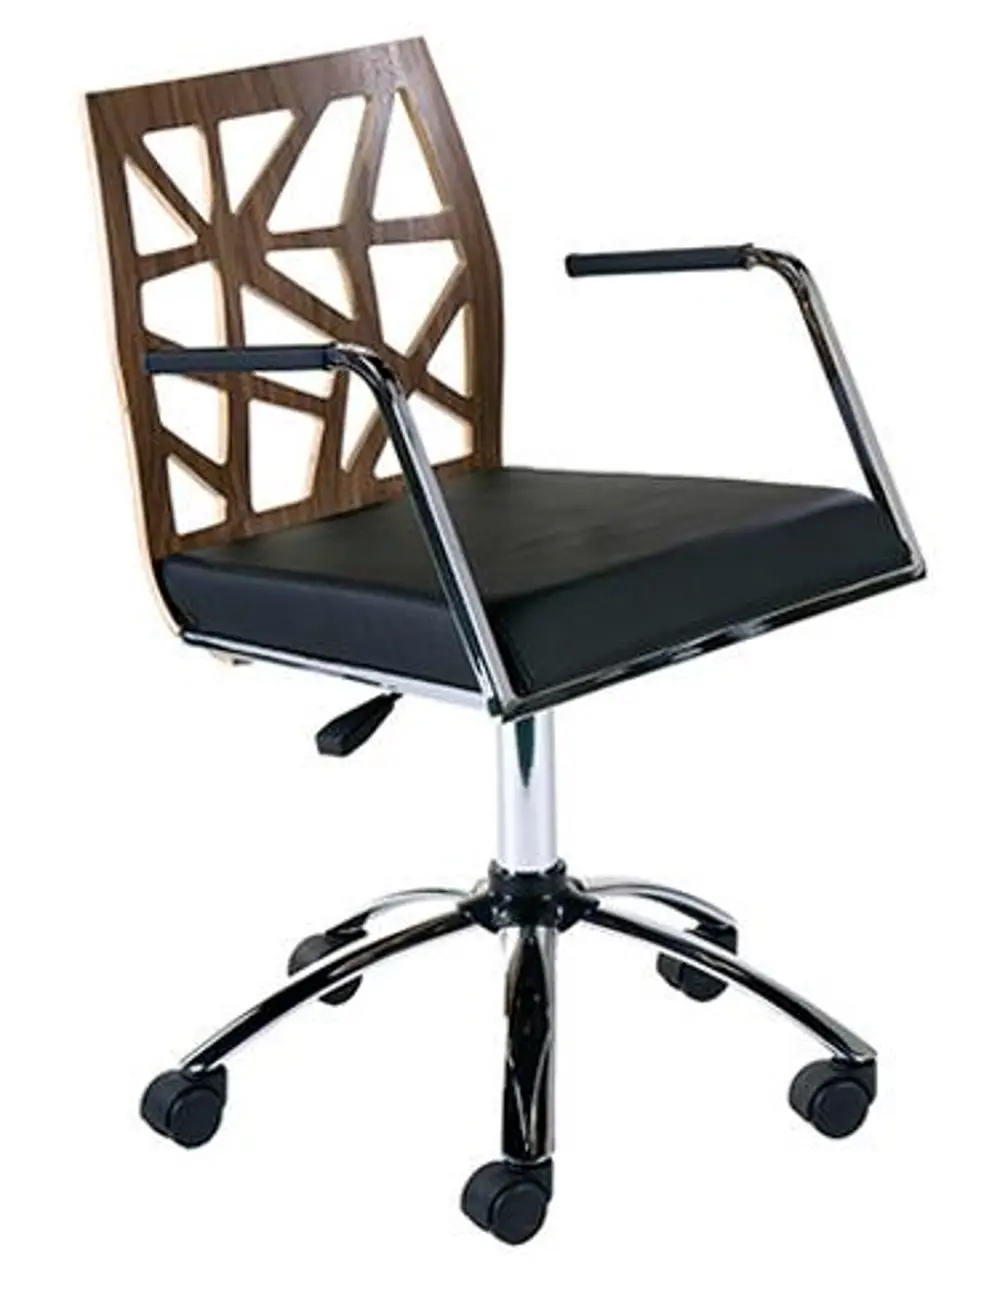 Walnut and Black Office Chair - Sophia-1